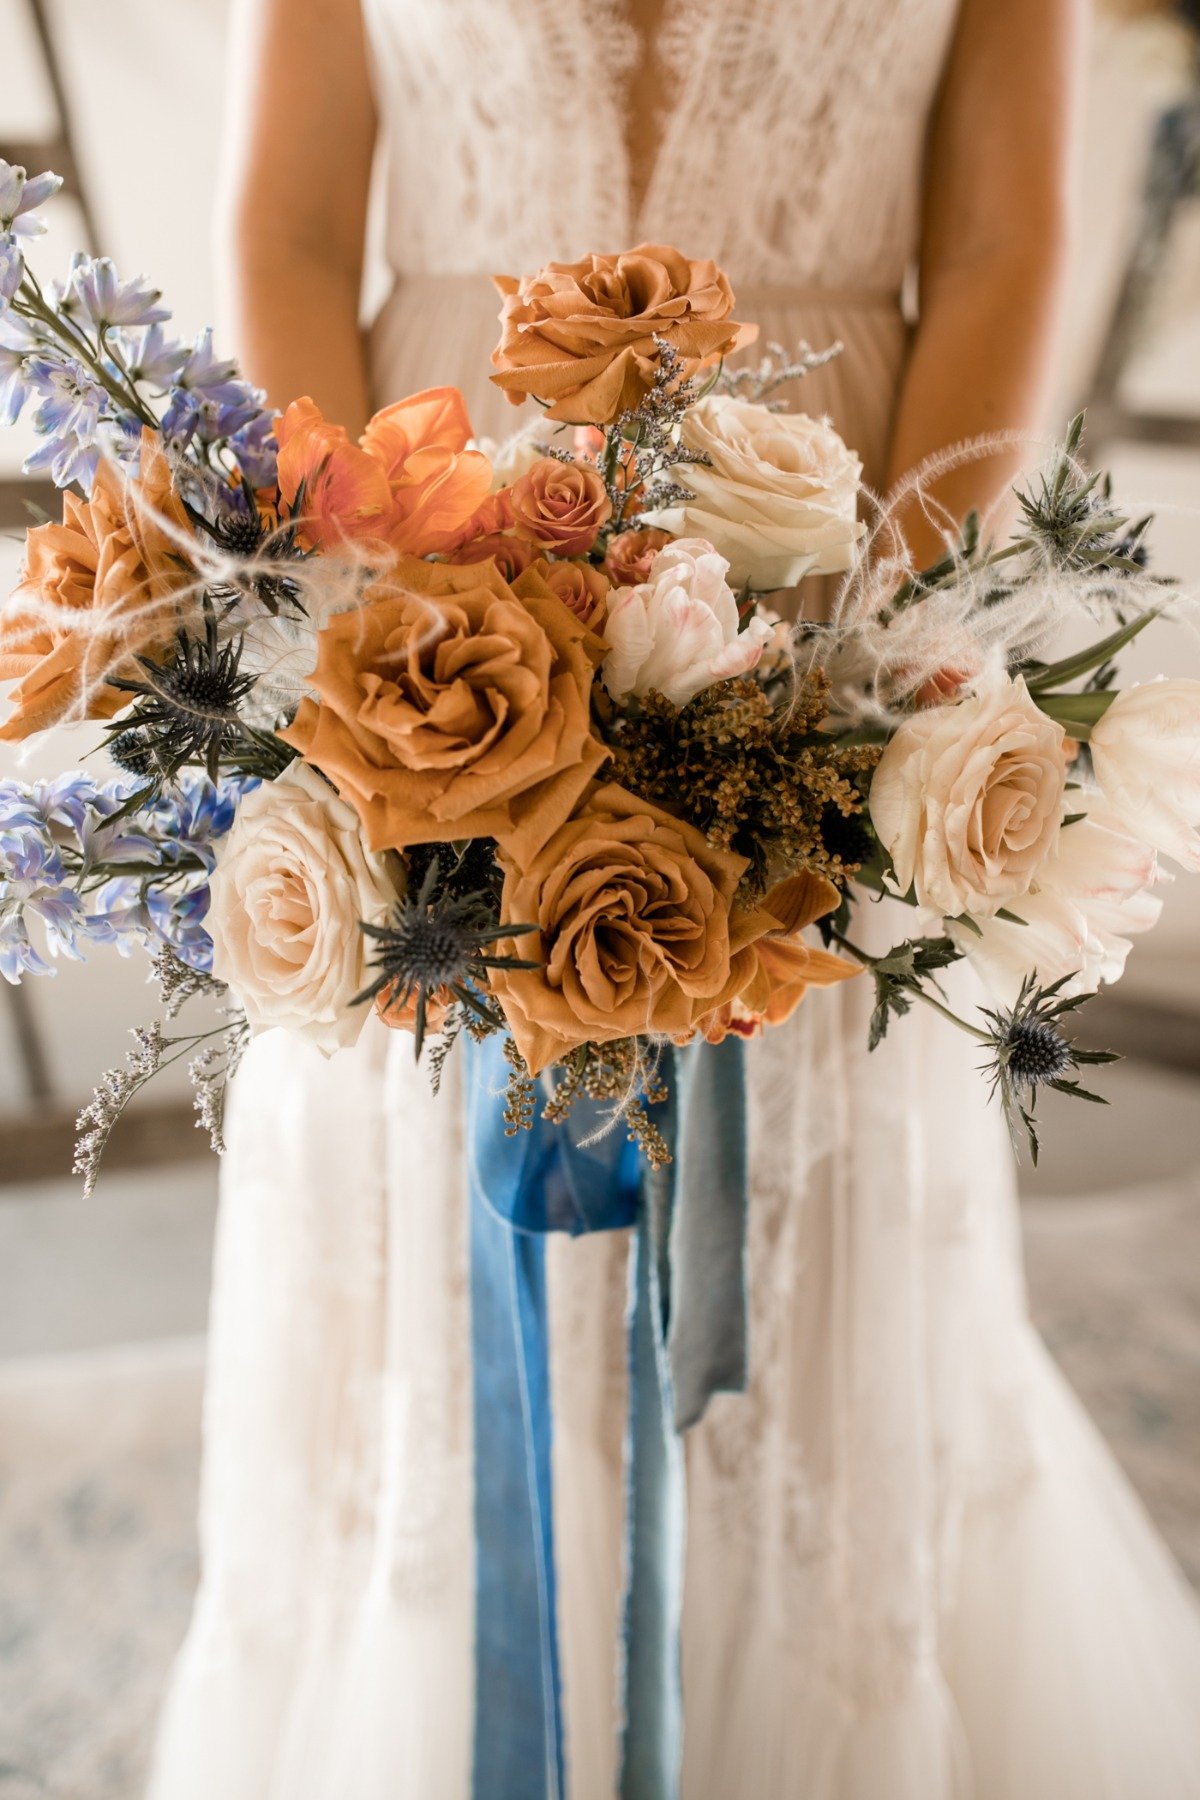 whimsical blue, orange and white wedding bouquet by Flourish & Knot